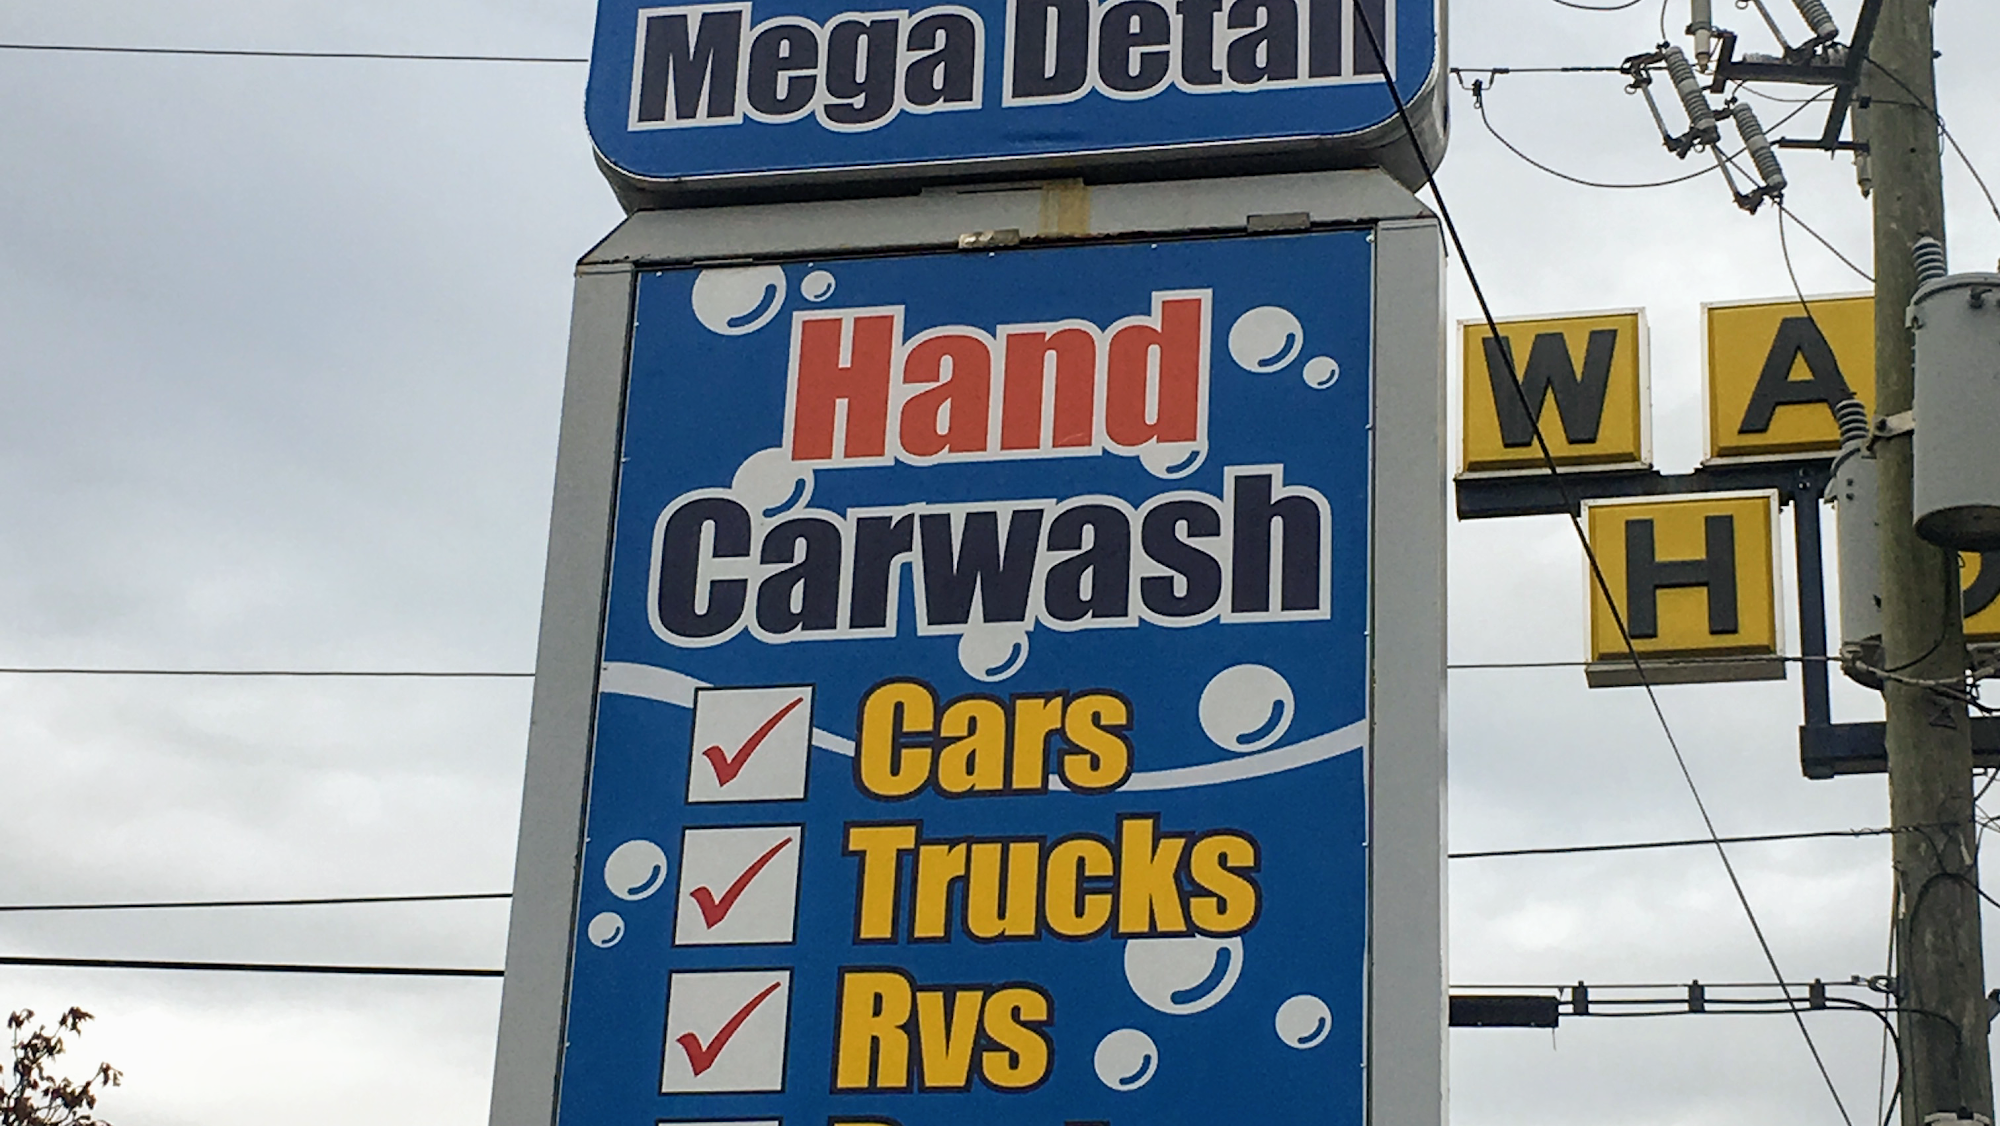 Mega Detail/Hand Car Wash & Emission testing